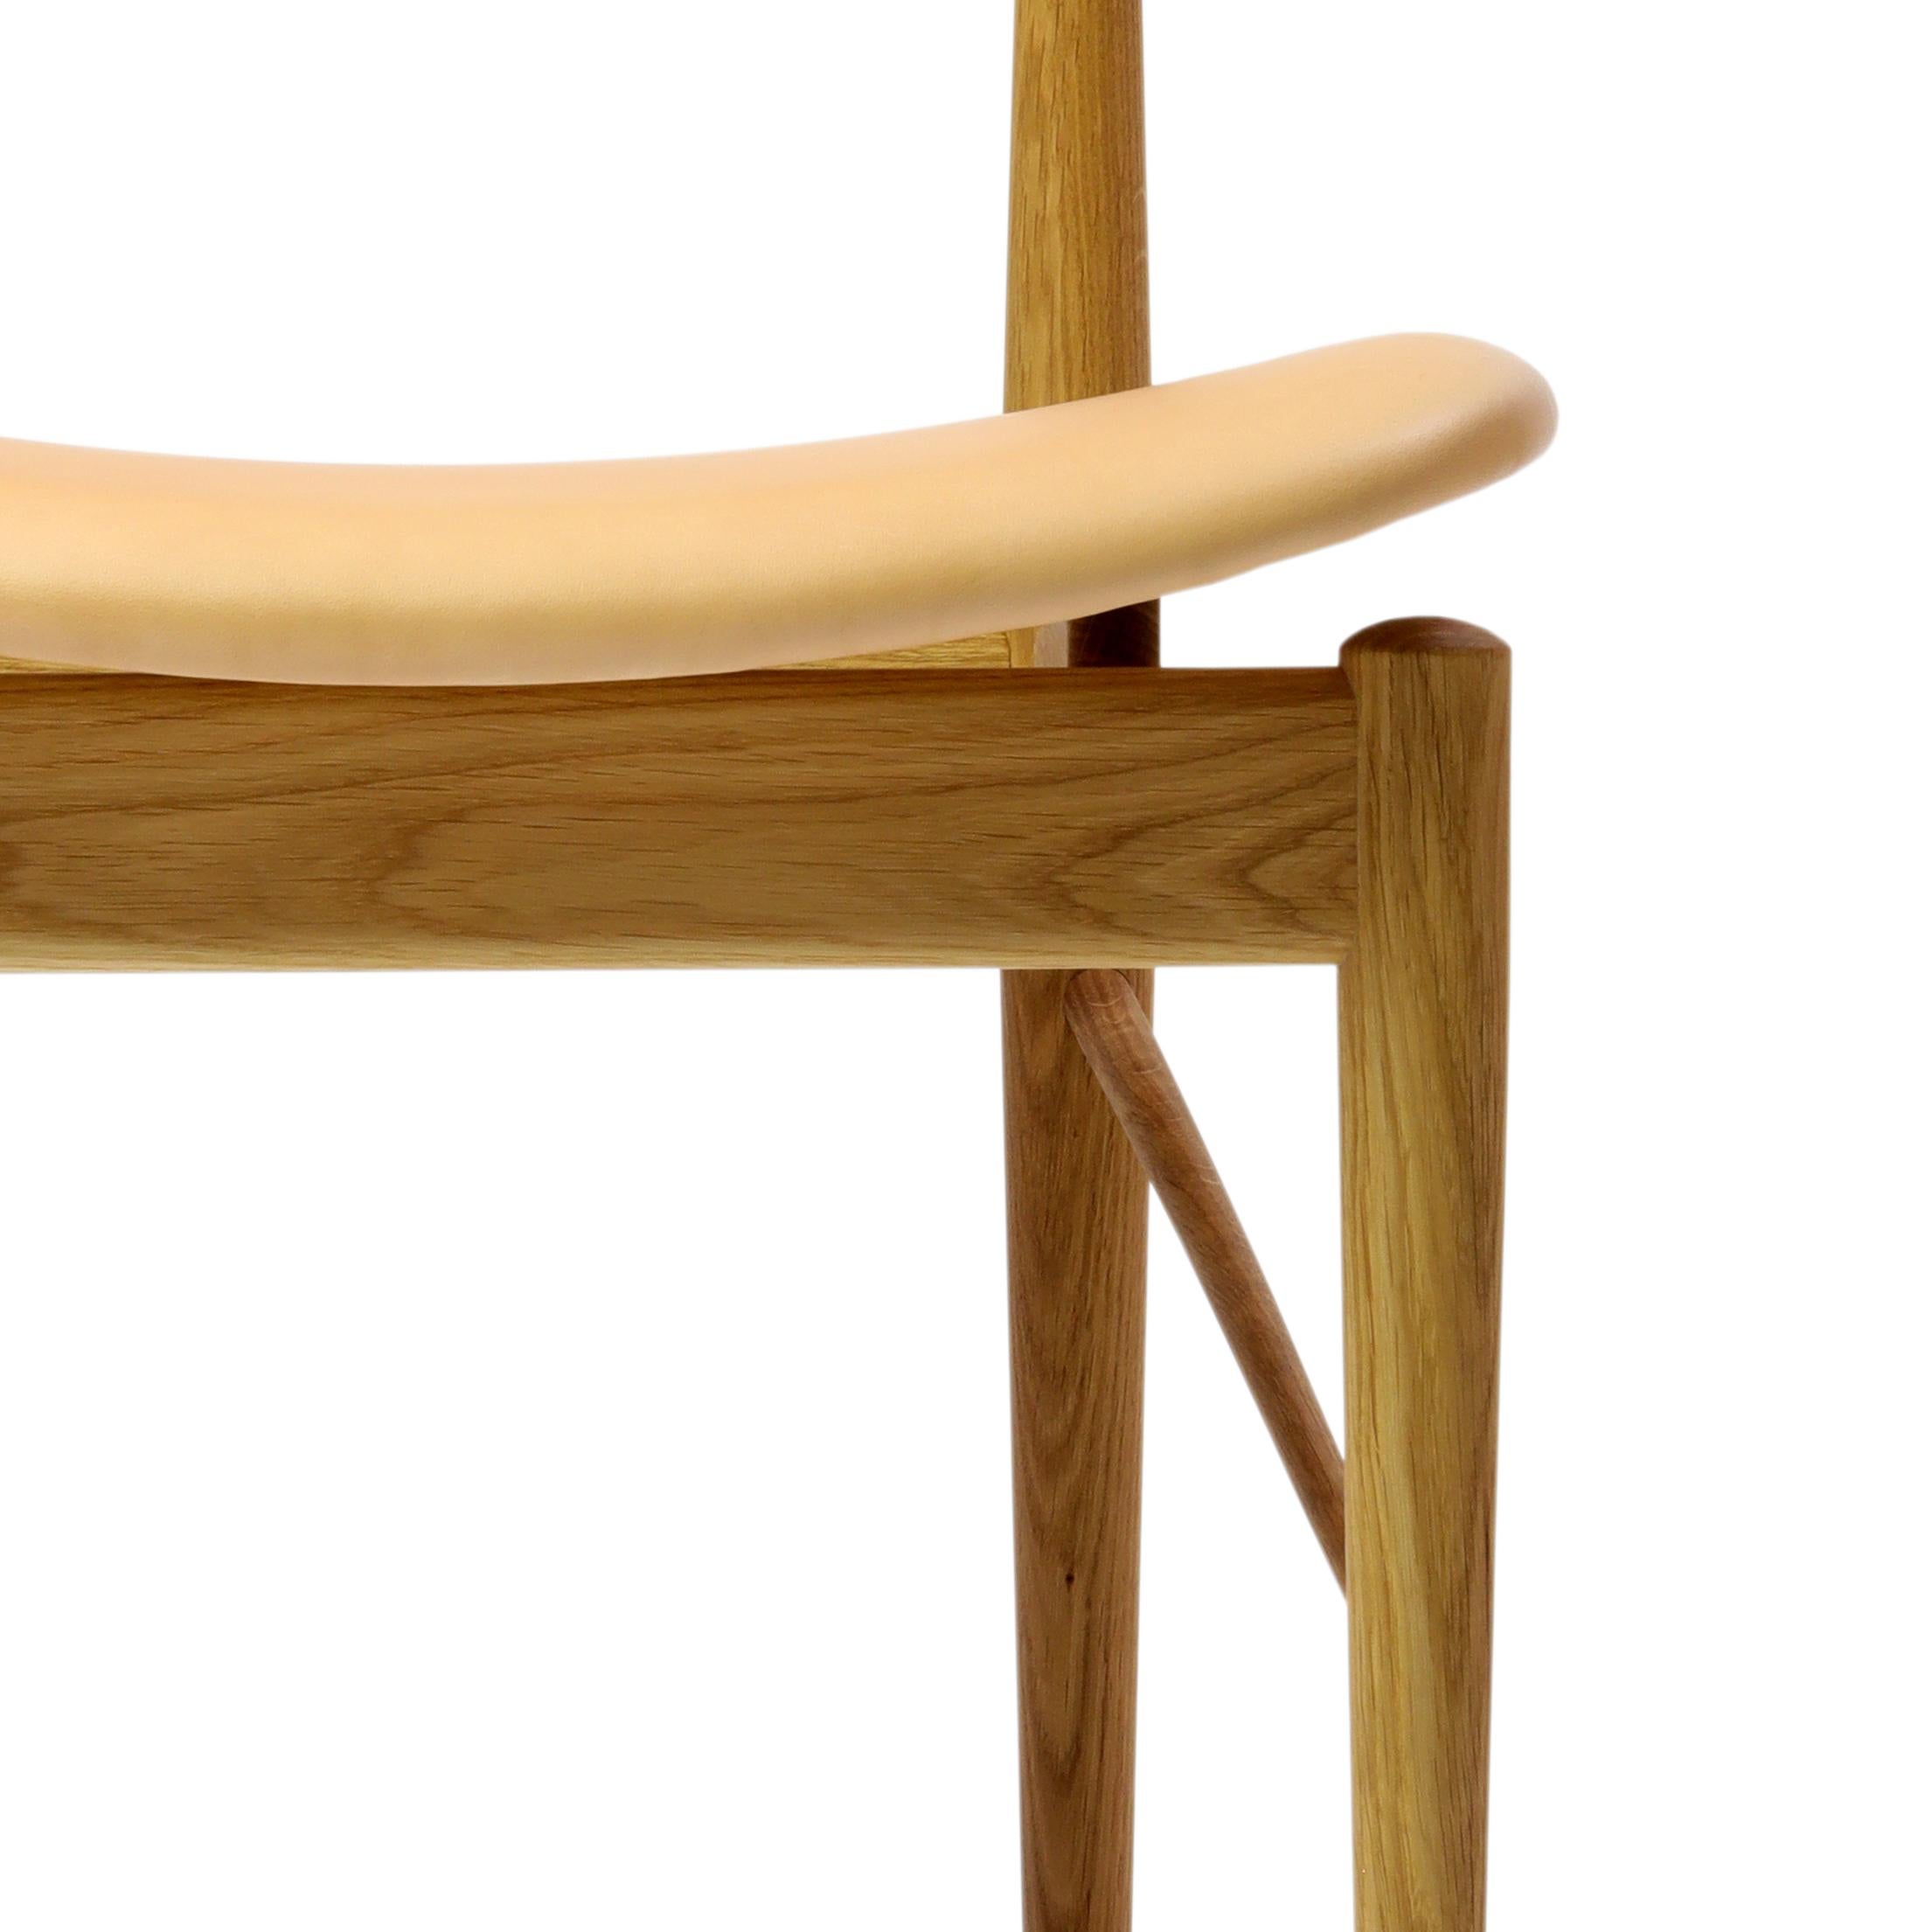 Danish Finn Juhl Reading Chair, Wood and Leather